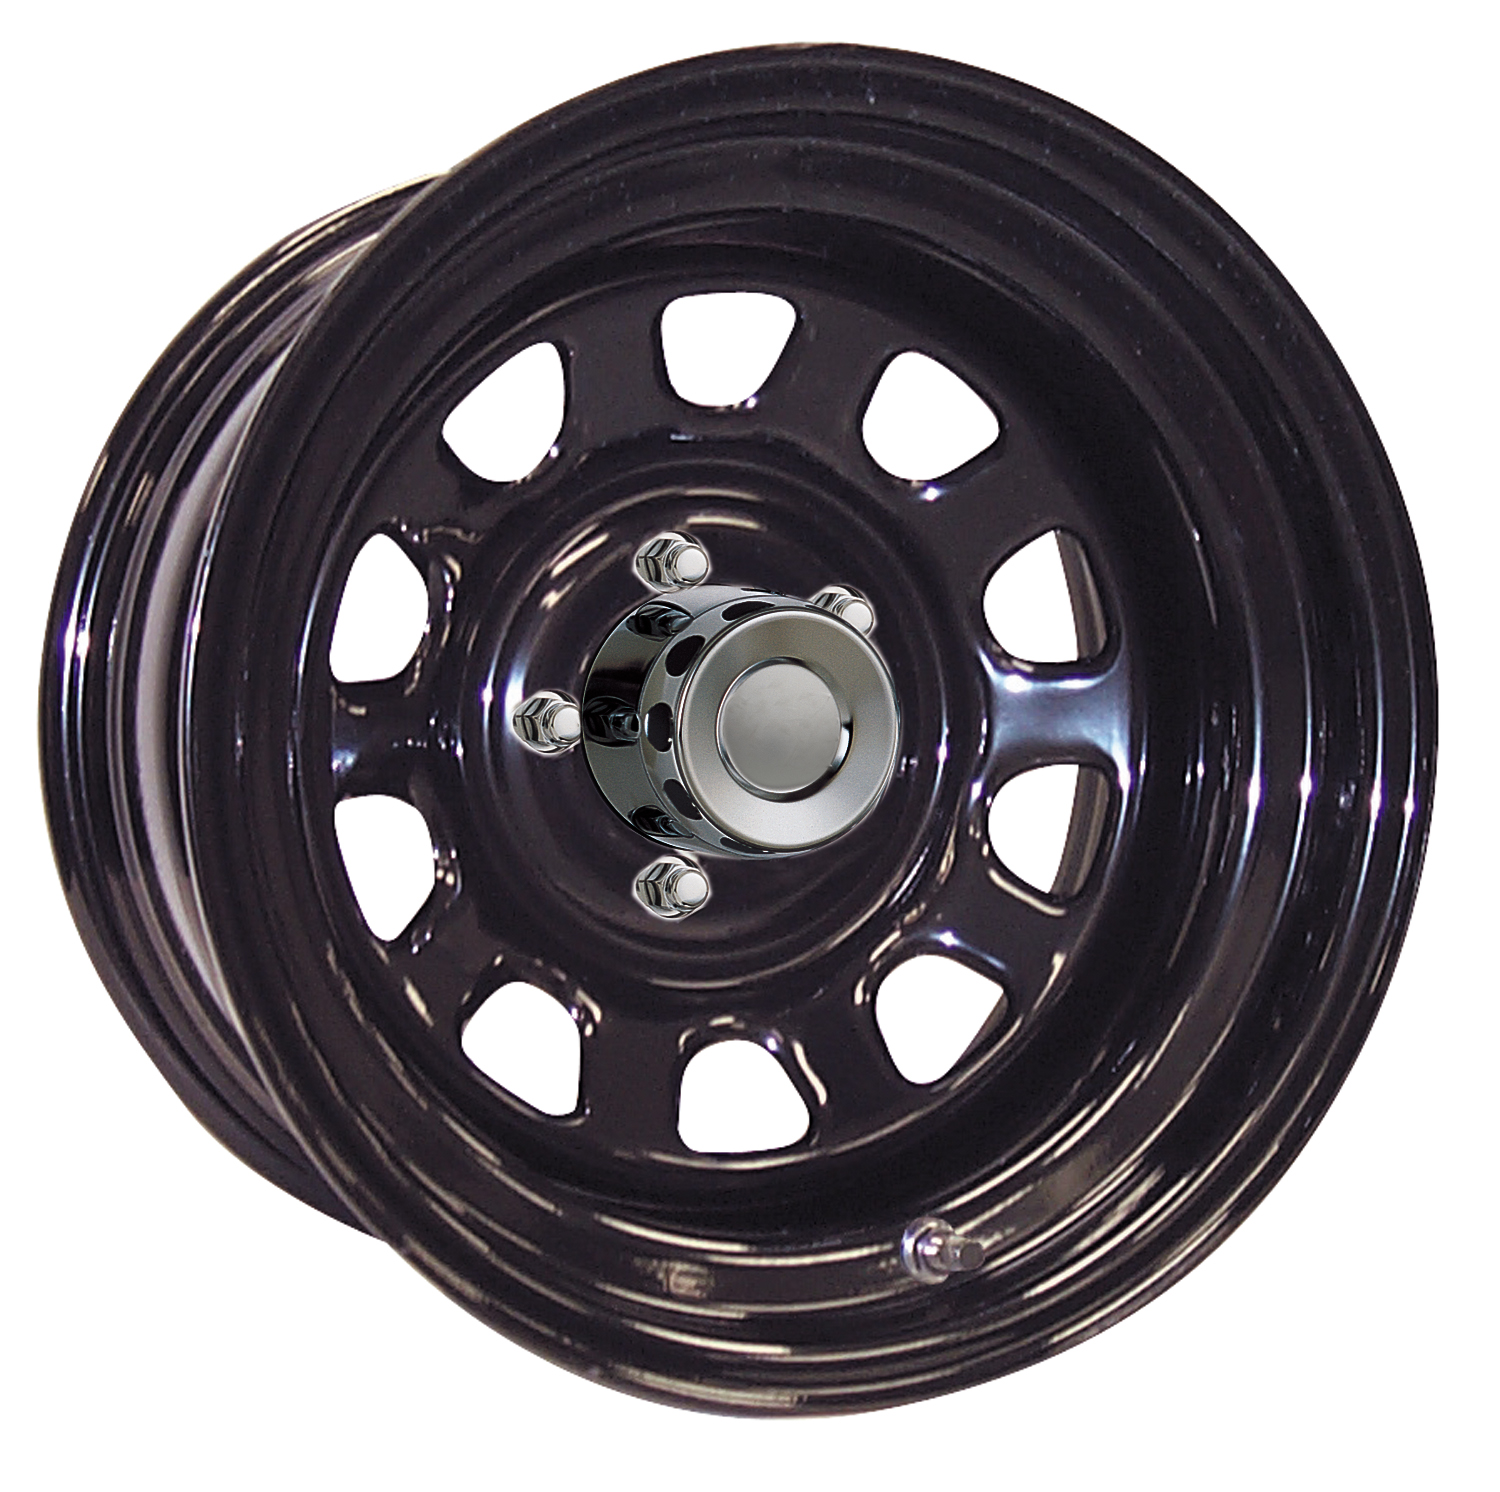 Pro Comp Wheels Pro Comp Wheels 52-5883R2.5M Rock Crawler Series 52 Black Monster Mod Wheel